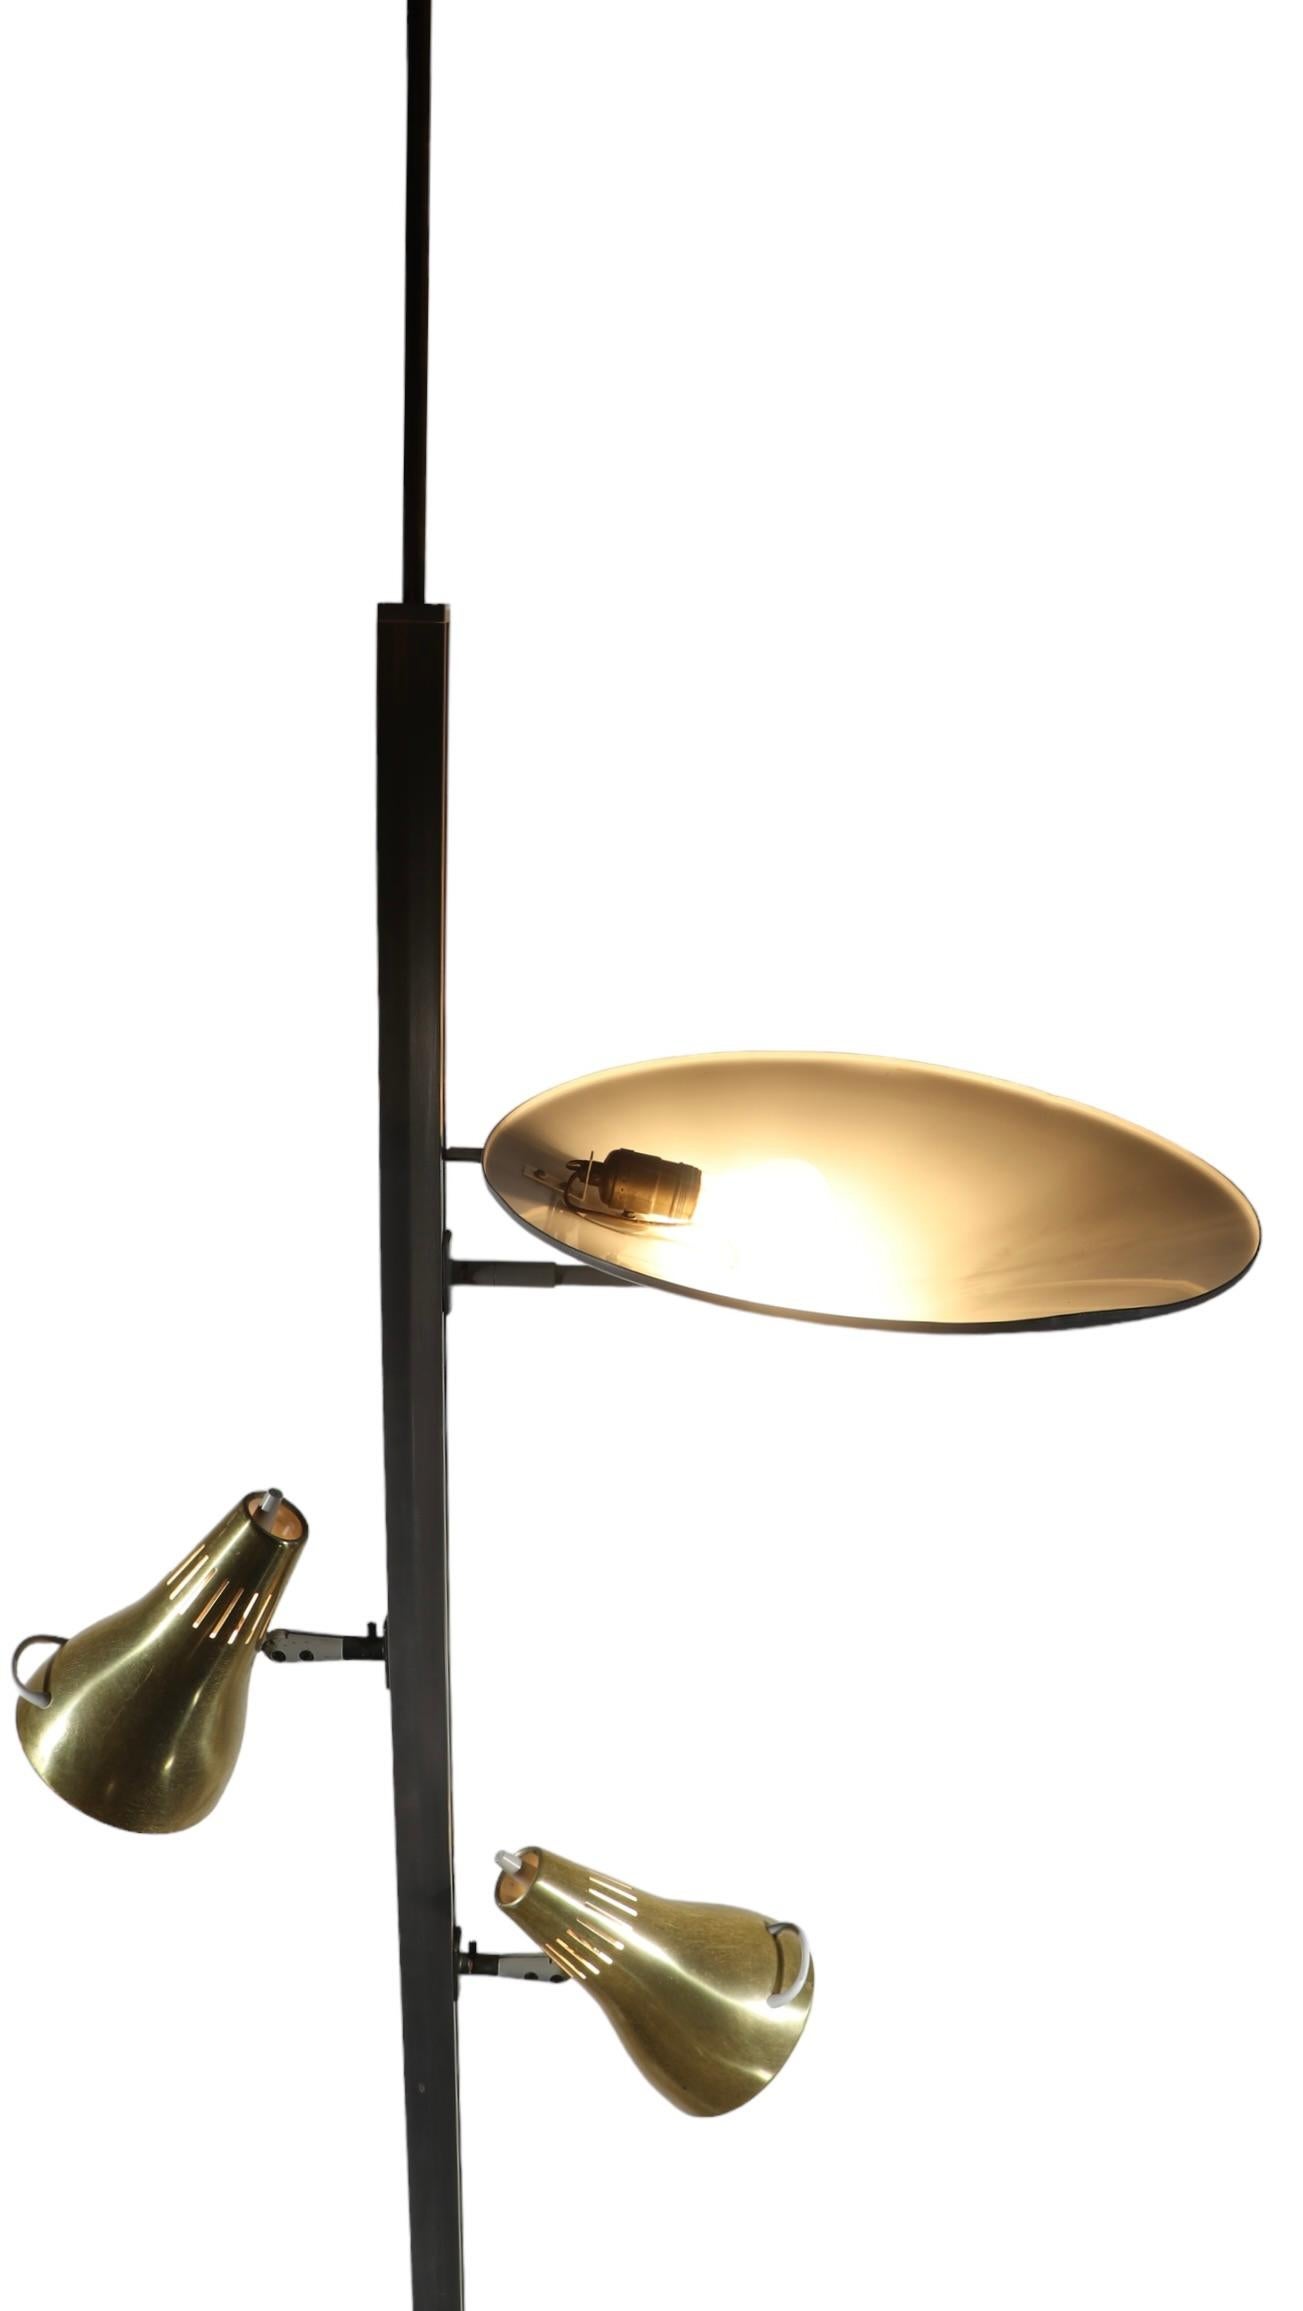 20th Century Mid Century Lytespan Tension Floor Lamp By Thurston for Lightolier c 1950/1960's For Sale